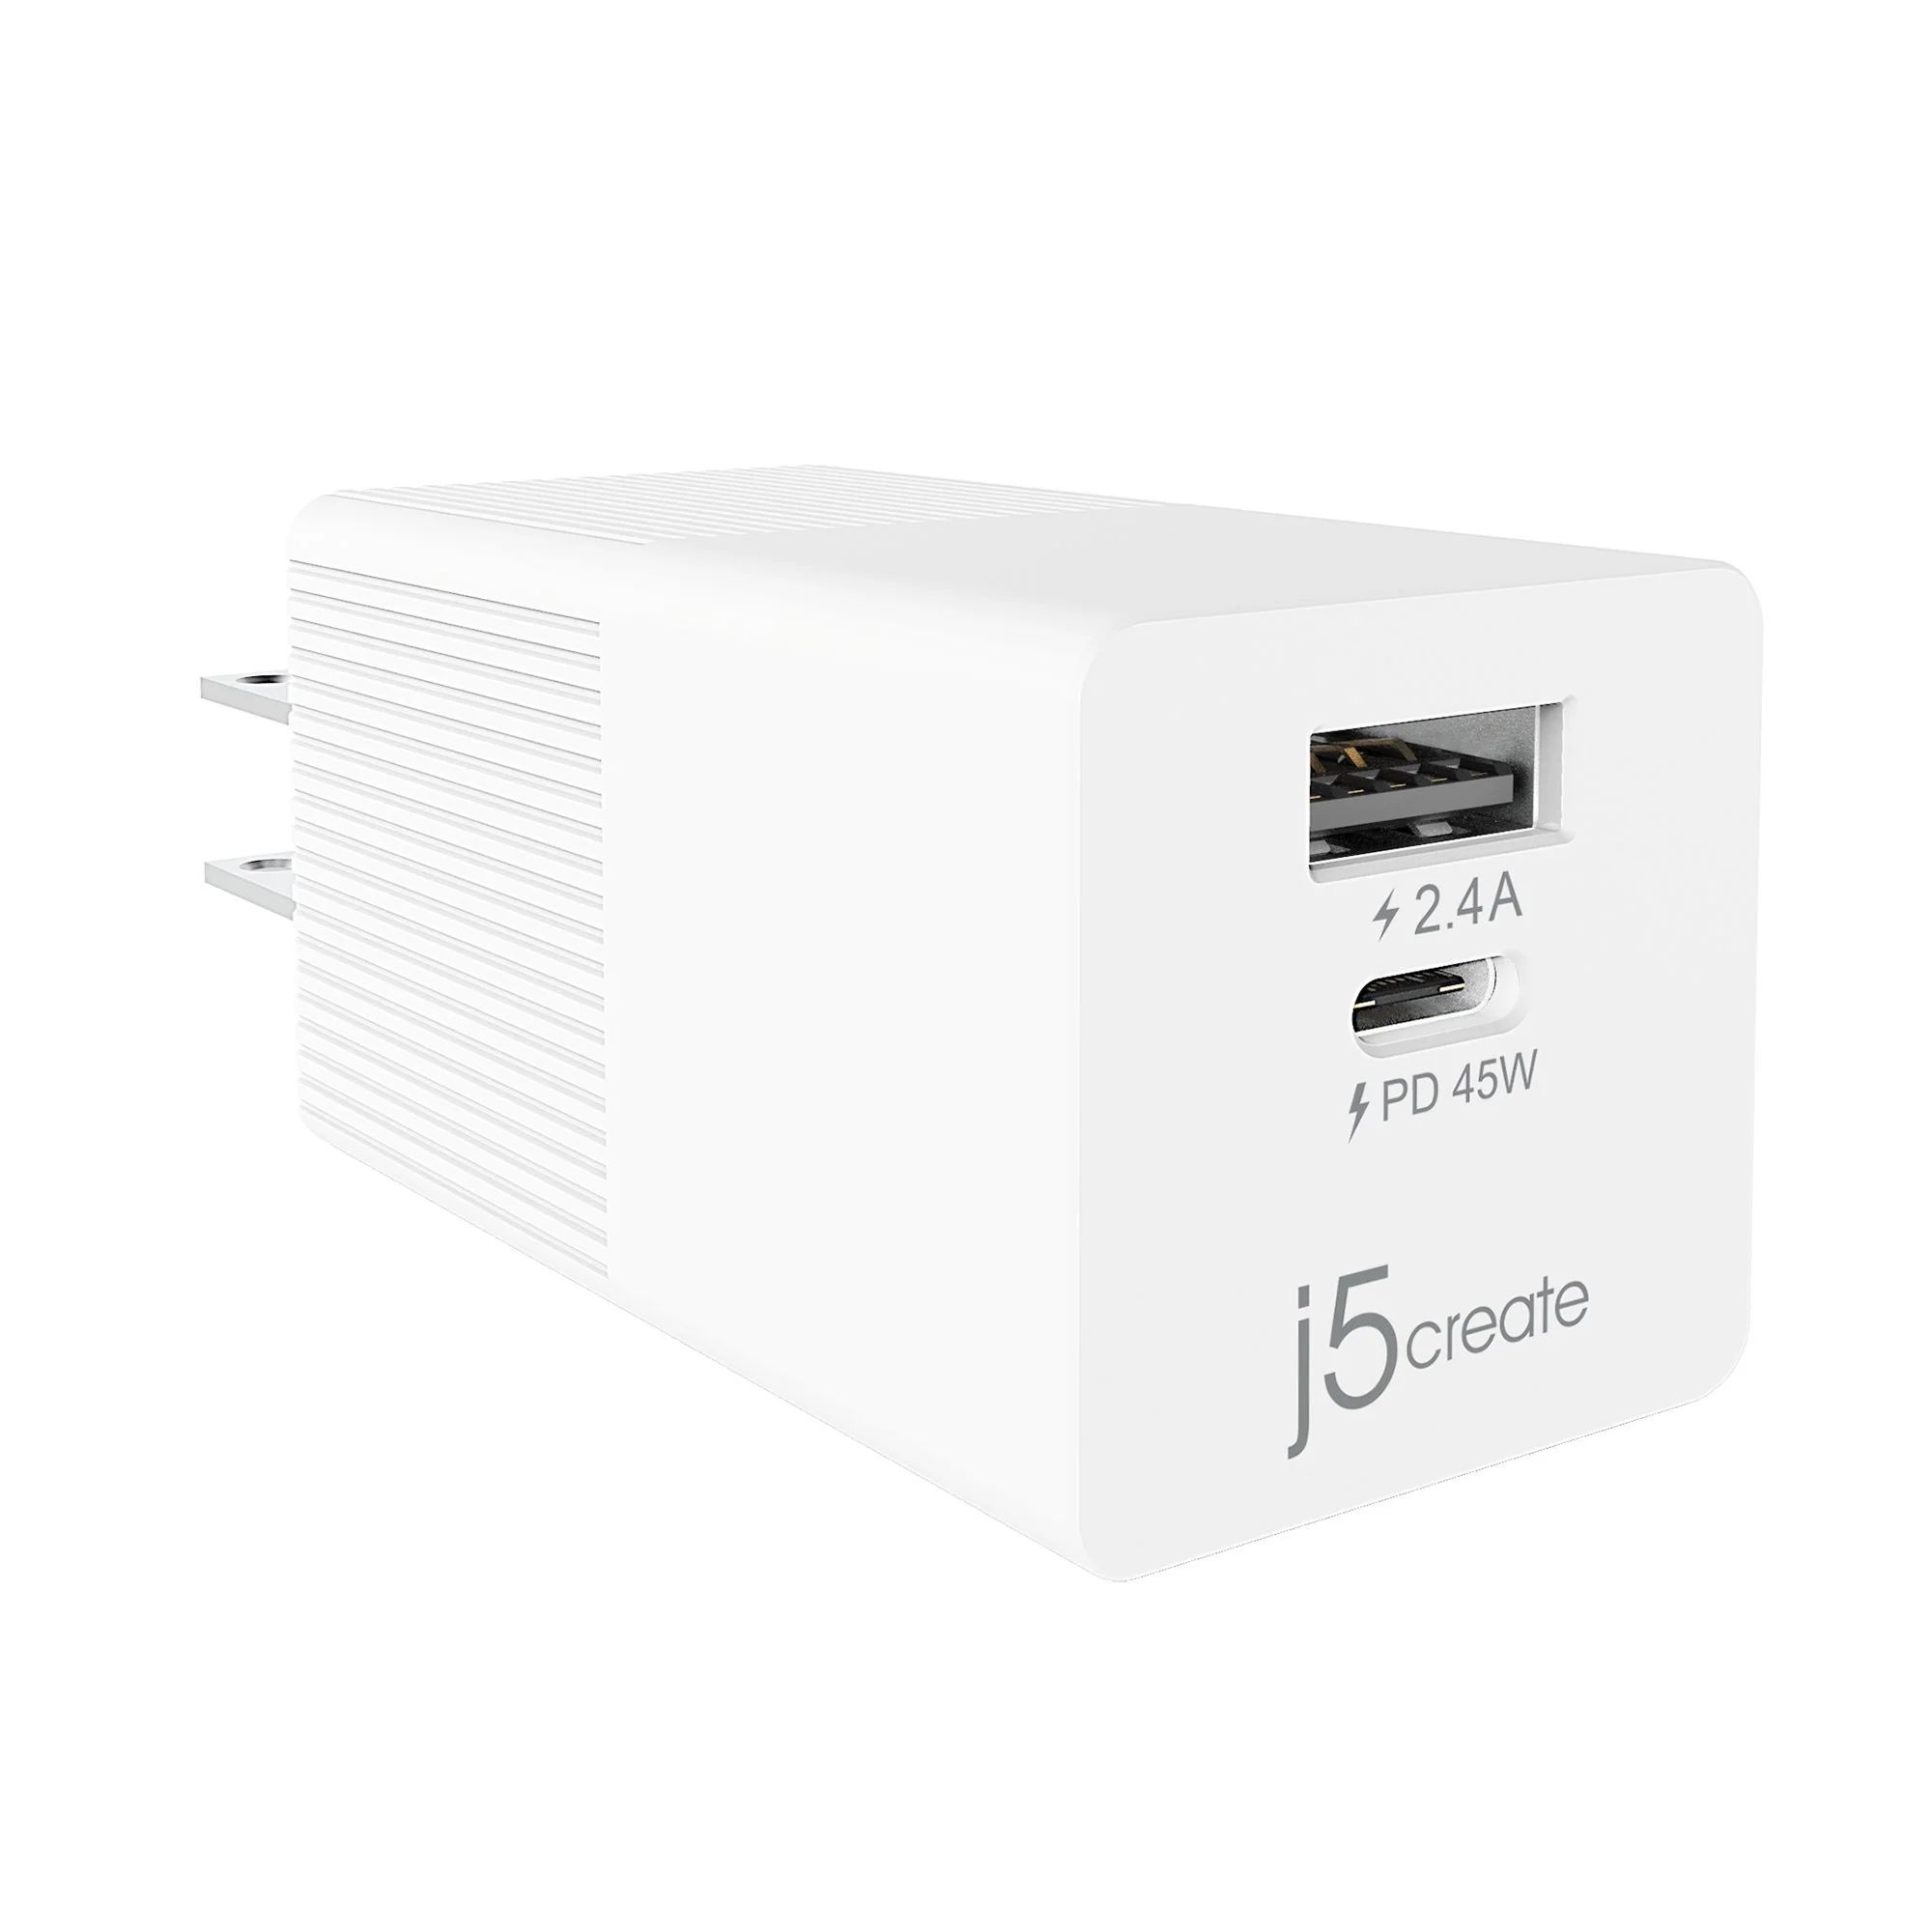 Сетевое зарядное устройство j5create 45W JUP2445 цена и фото